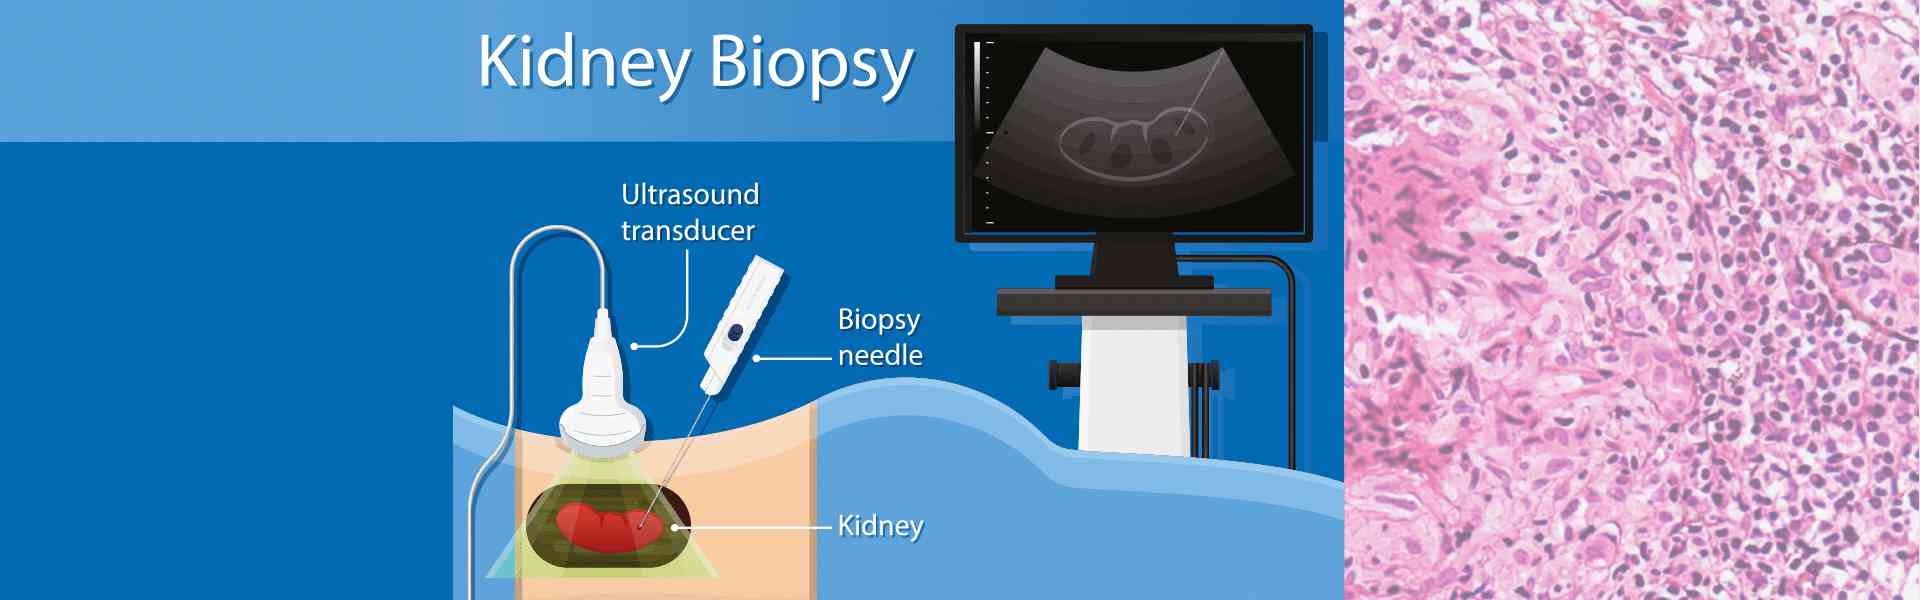 Kidney Biopsy Treatment in Sarjapur Road